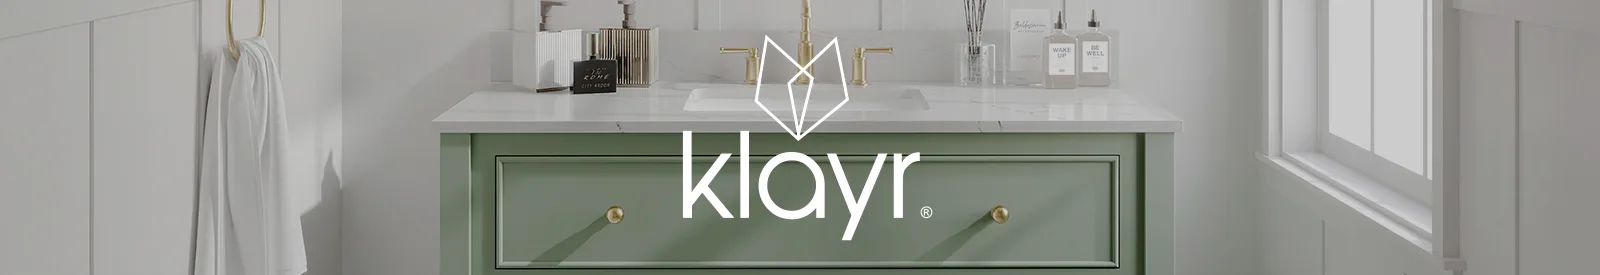 Klayr - Brand Page - Header Image